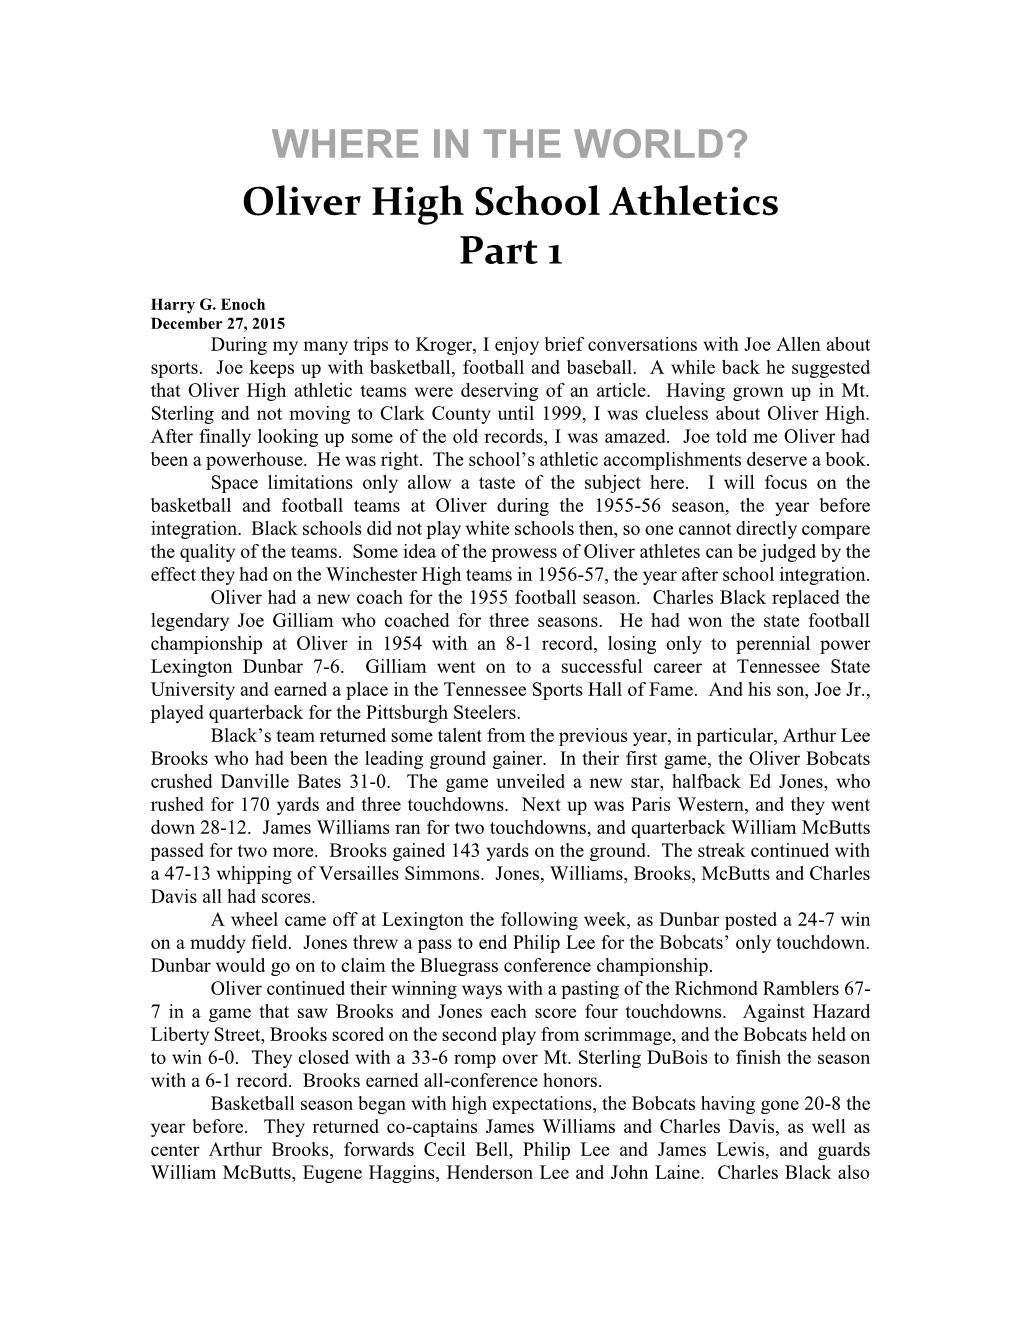 Oliver High Athletics